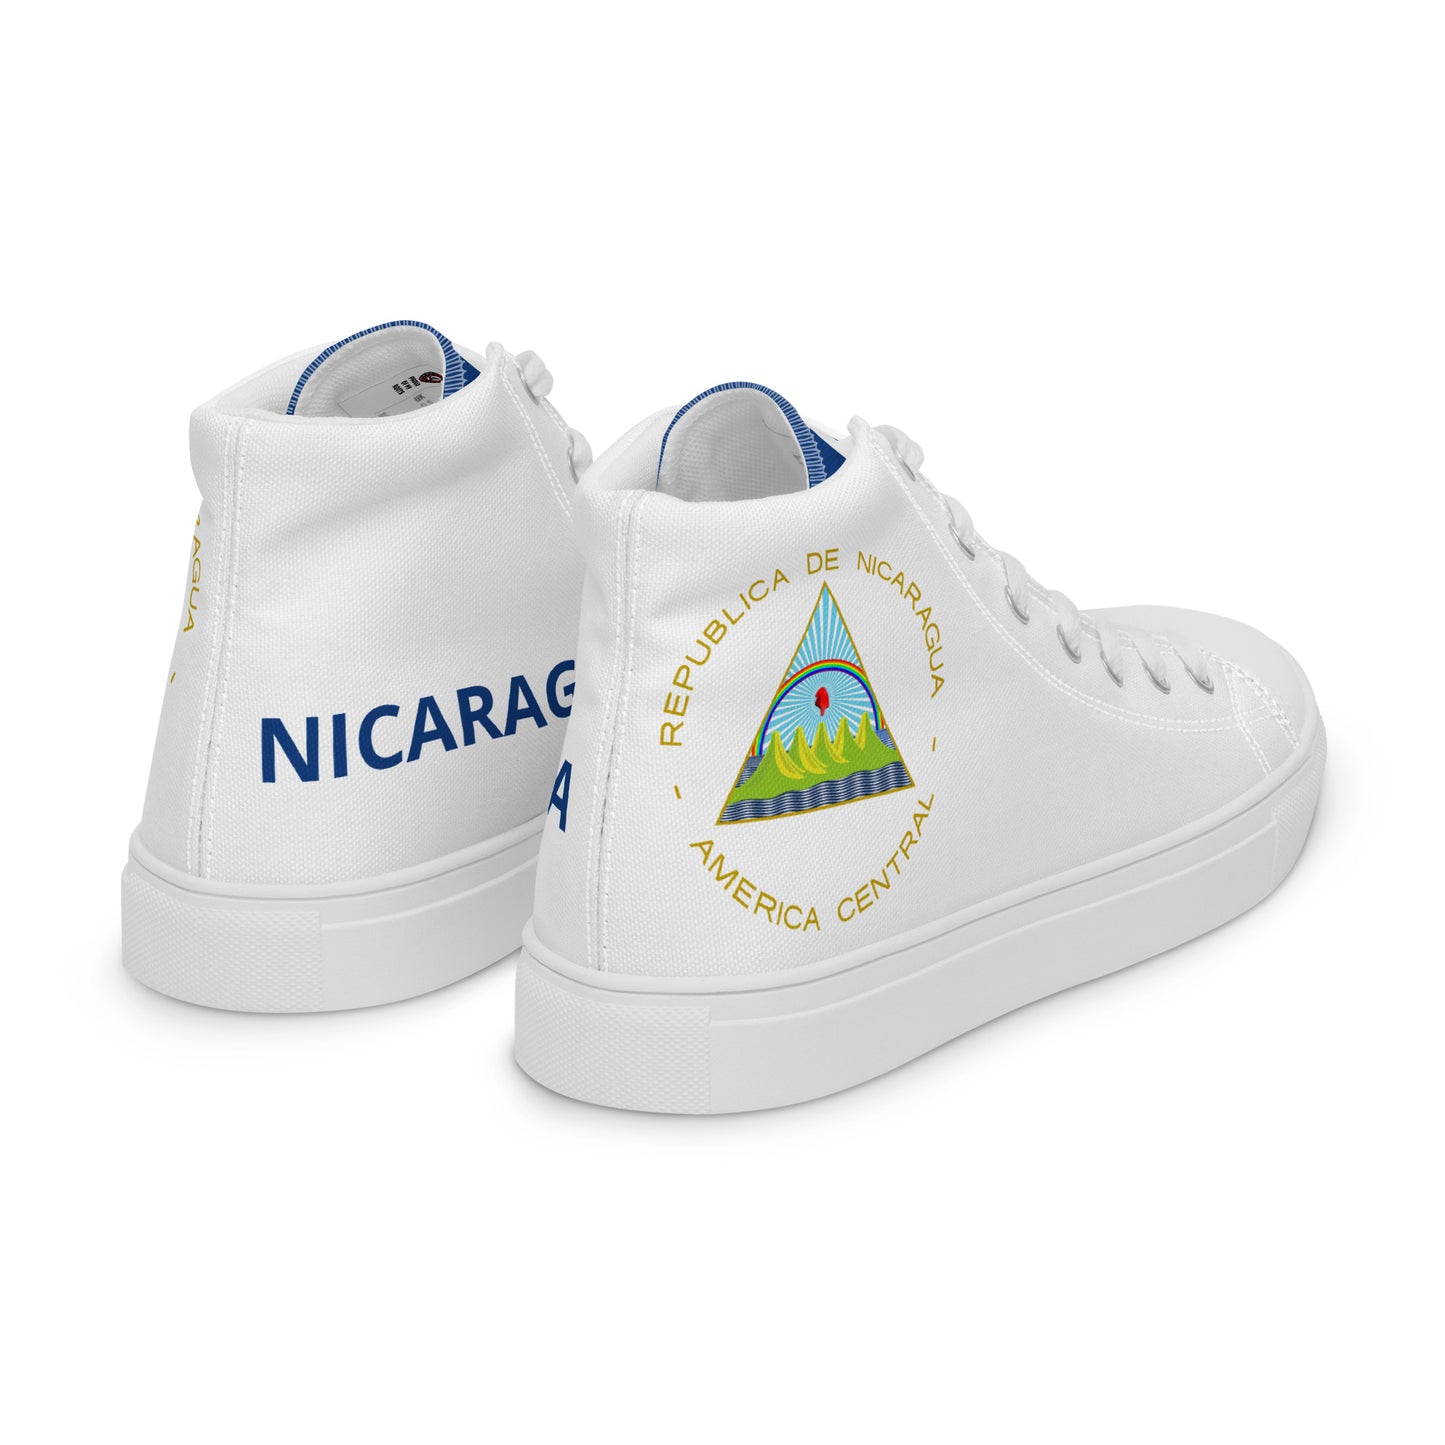 Nicaragua - Women - White - High top shoes